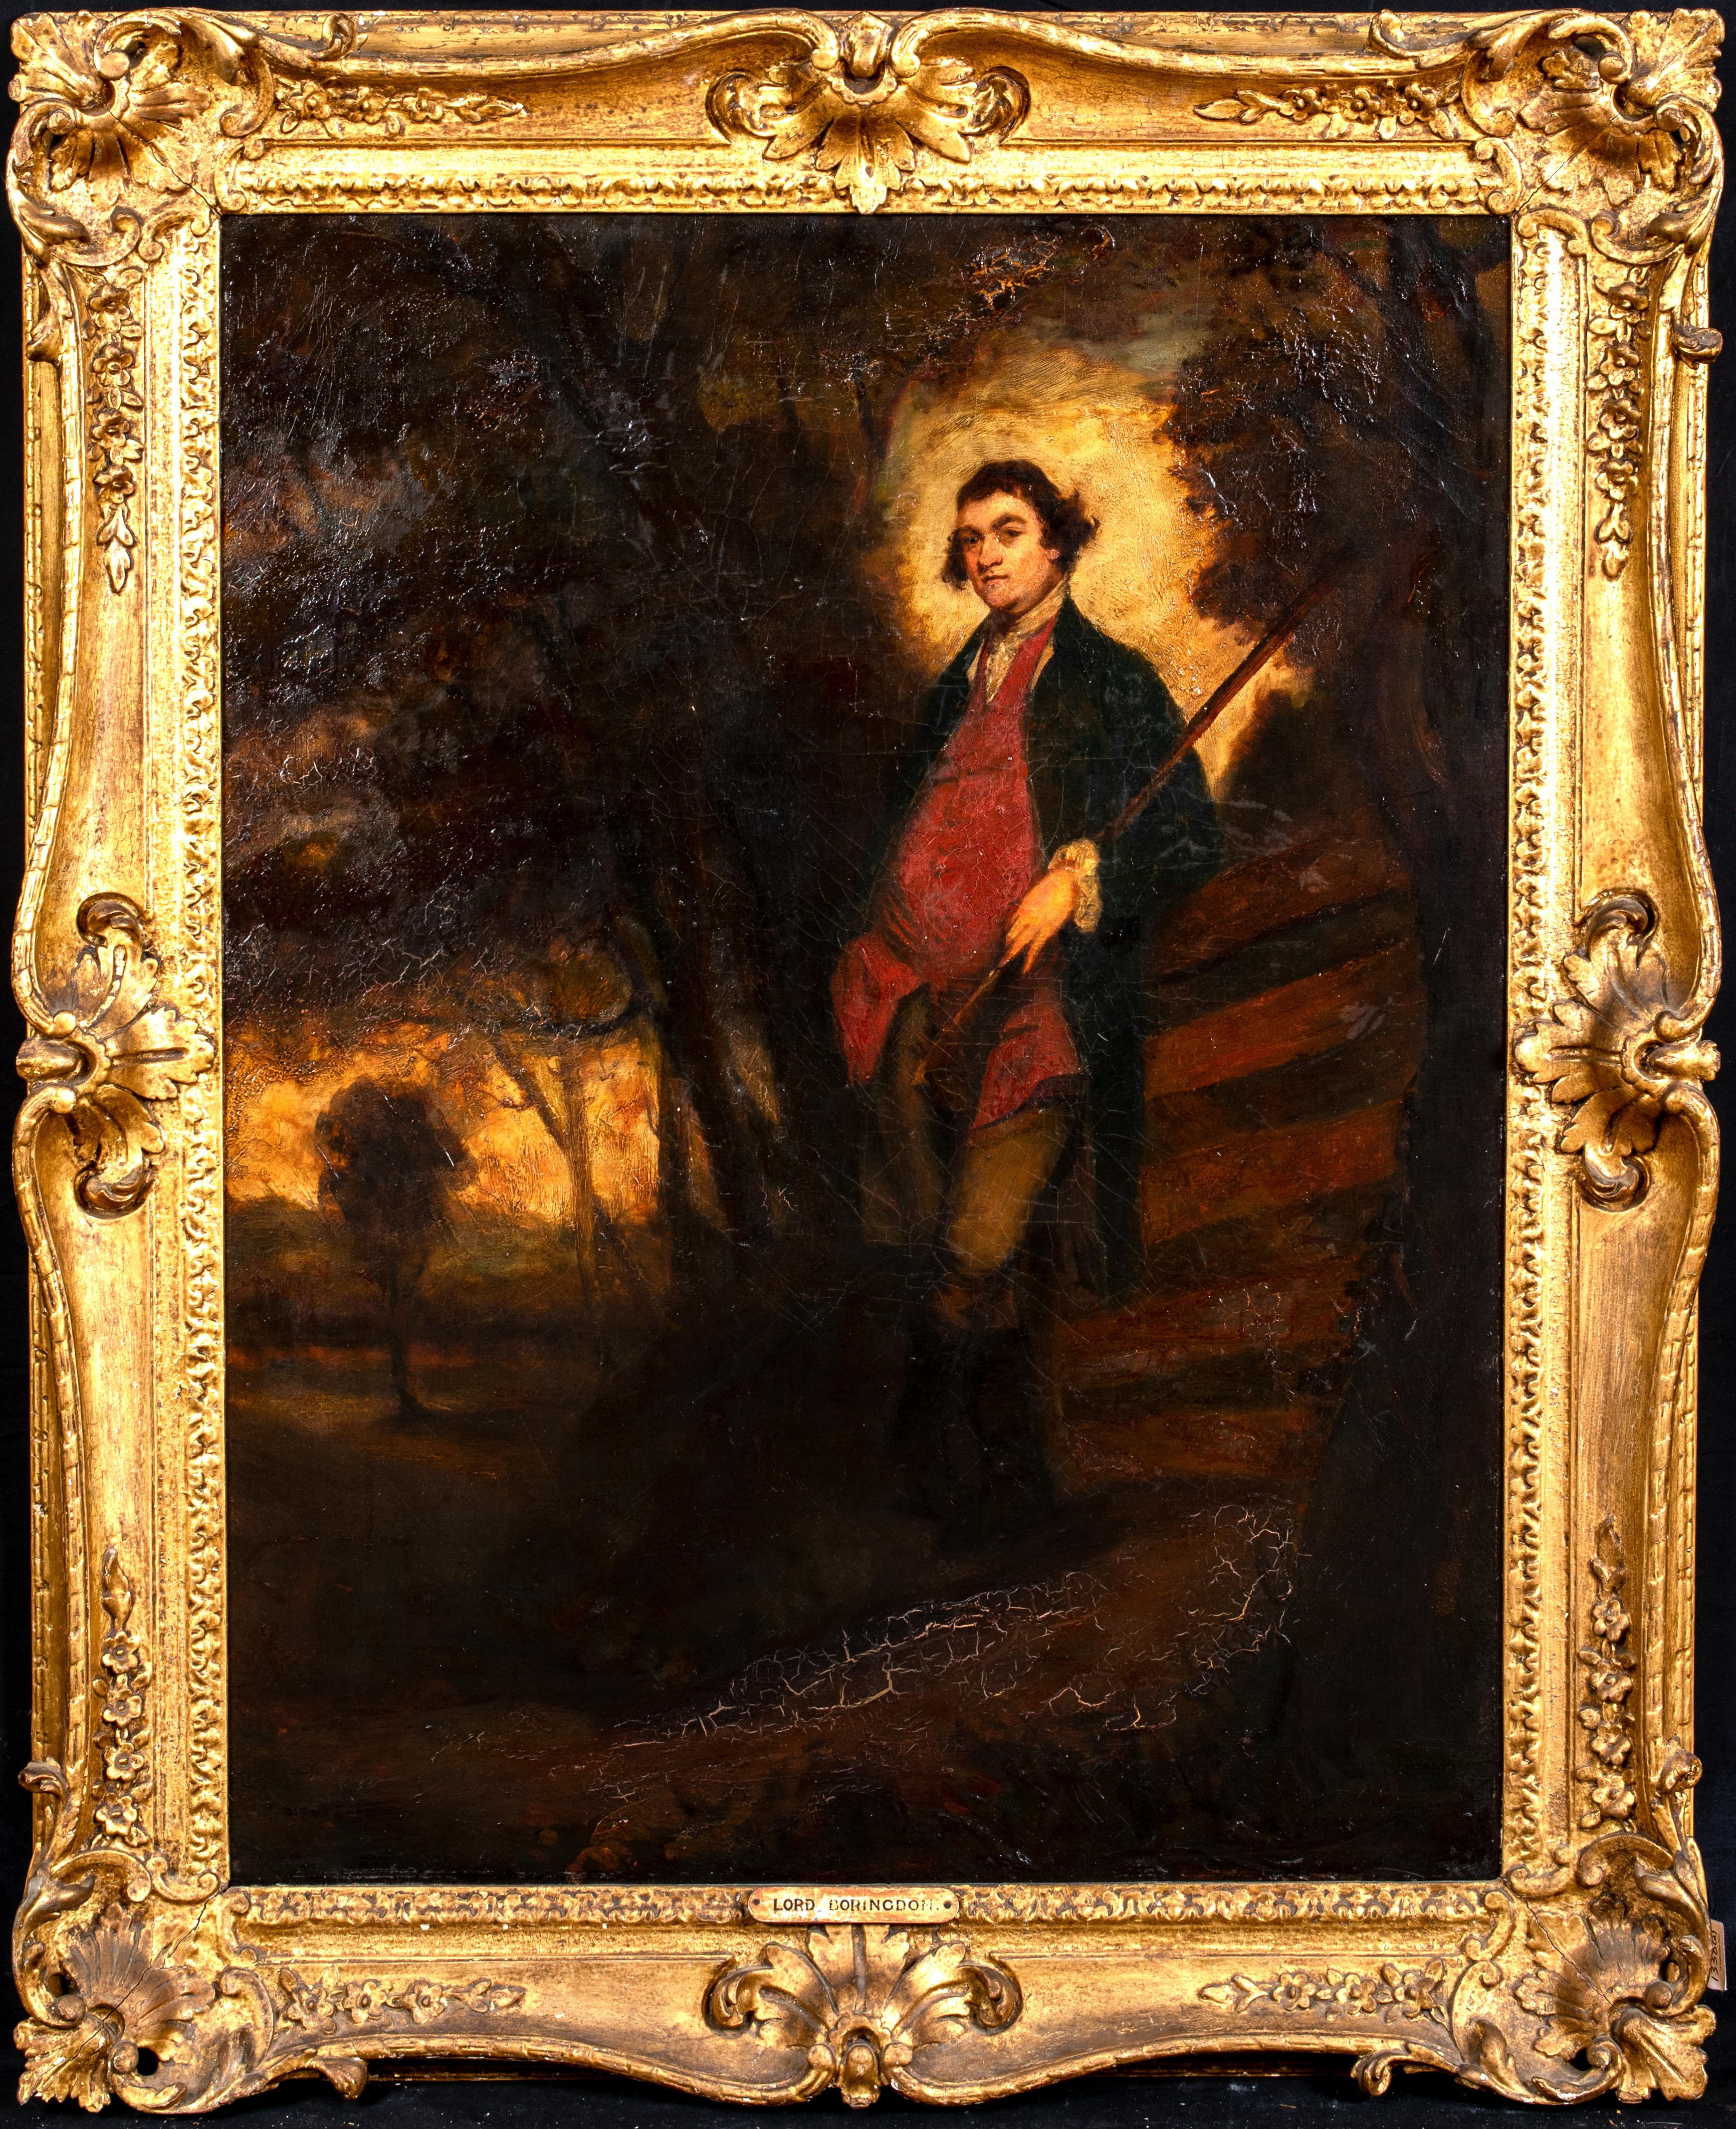 Joshua Reynolds Portrait Painting - Portrait Of John Parker, 1st Lord Boringdon (1735-1788), 18th century